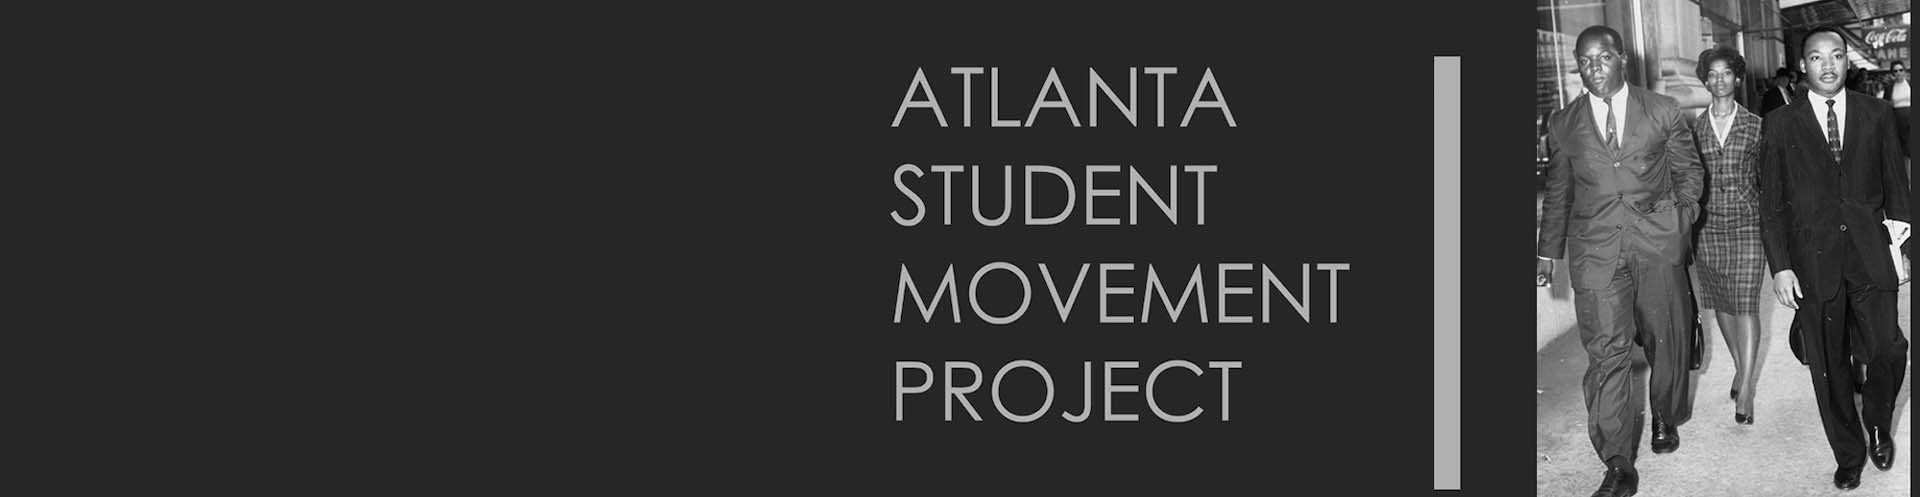 Atlanta Student Movement